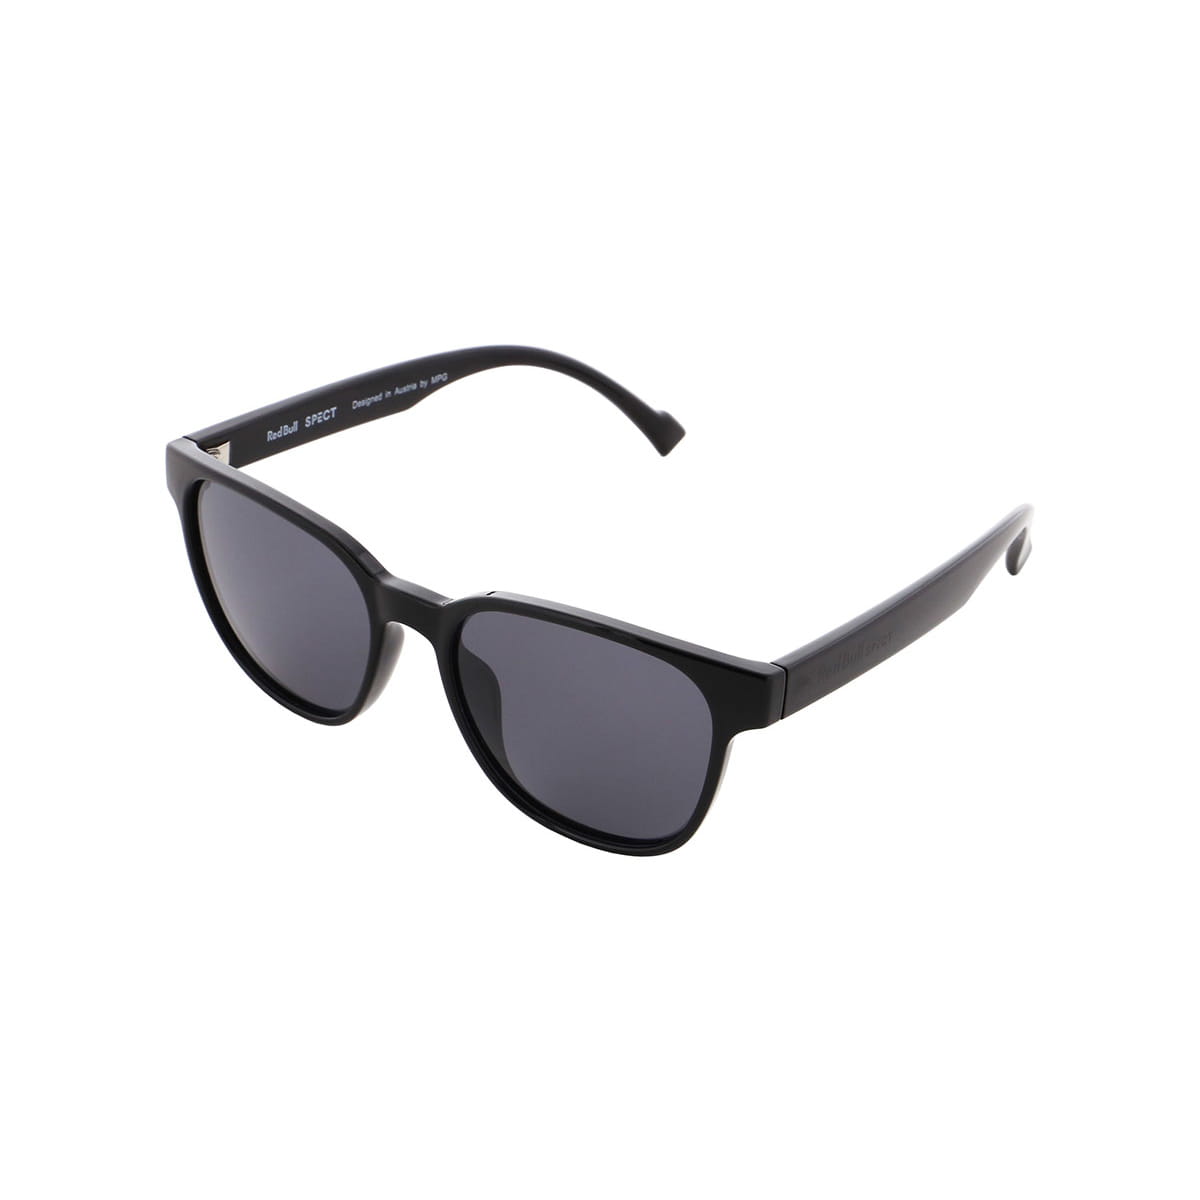 Red Bull SPECT Coby RX Sunglasses - Shiny Black/Smoke Grey | Sunglasses ...